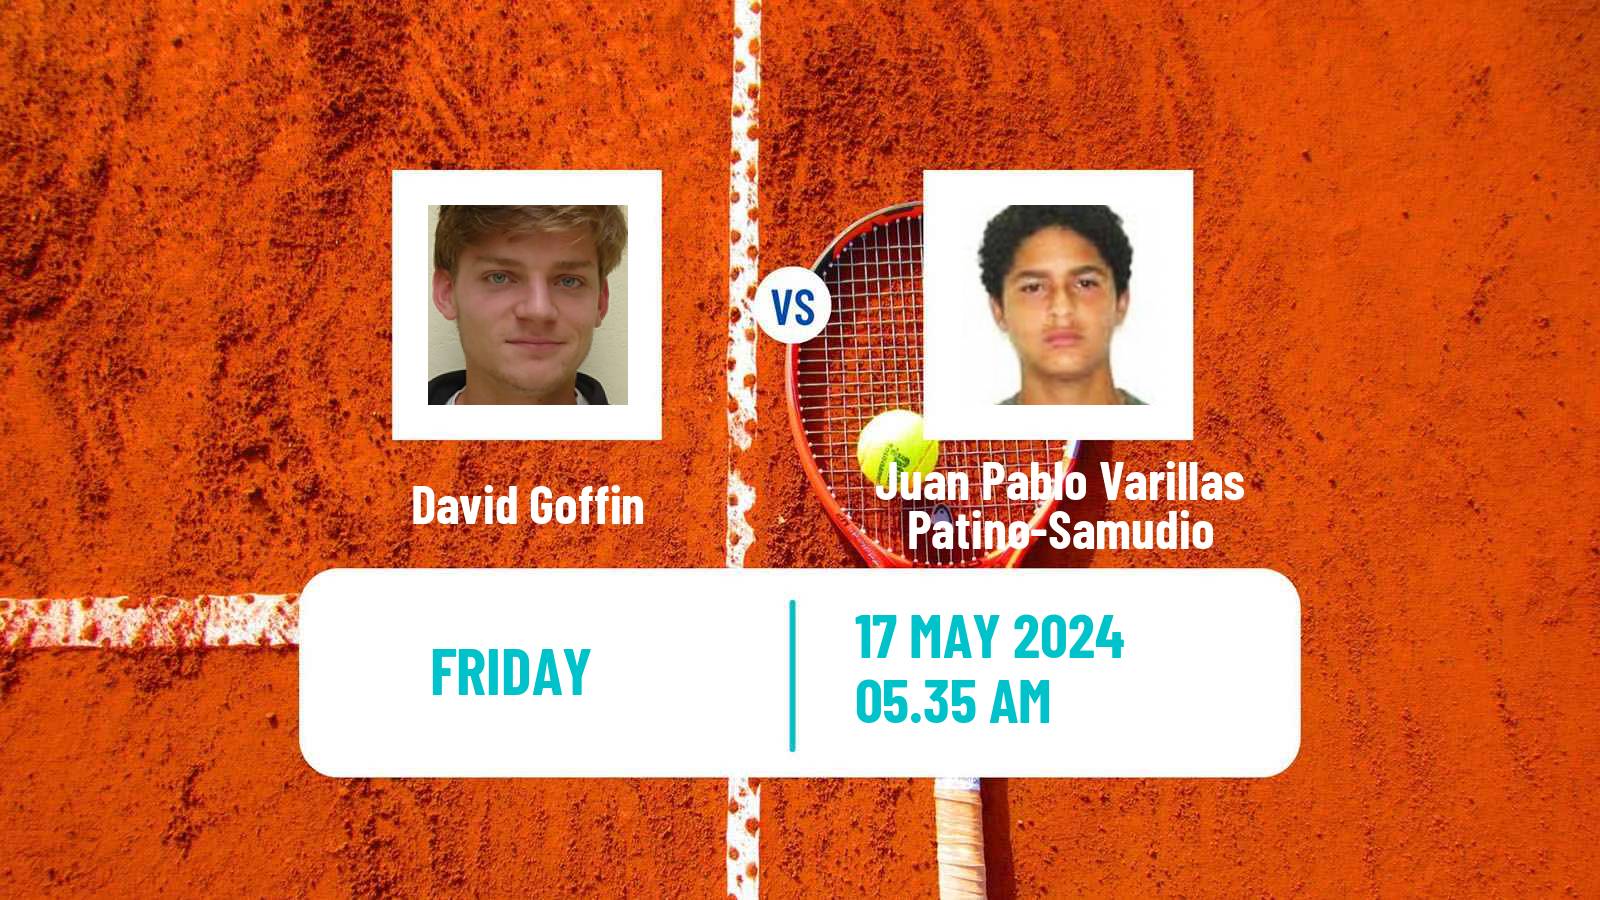 Tennis Turin 2 Challenger Men David Goffin - Juan Pablo Varillas Patino-Samudio